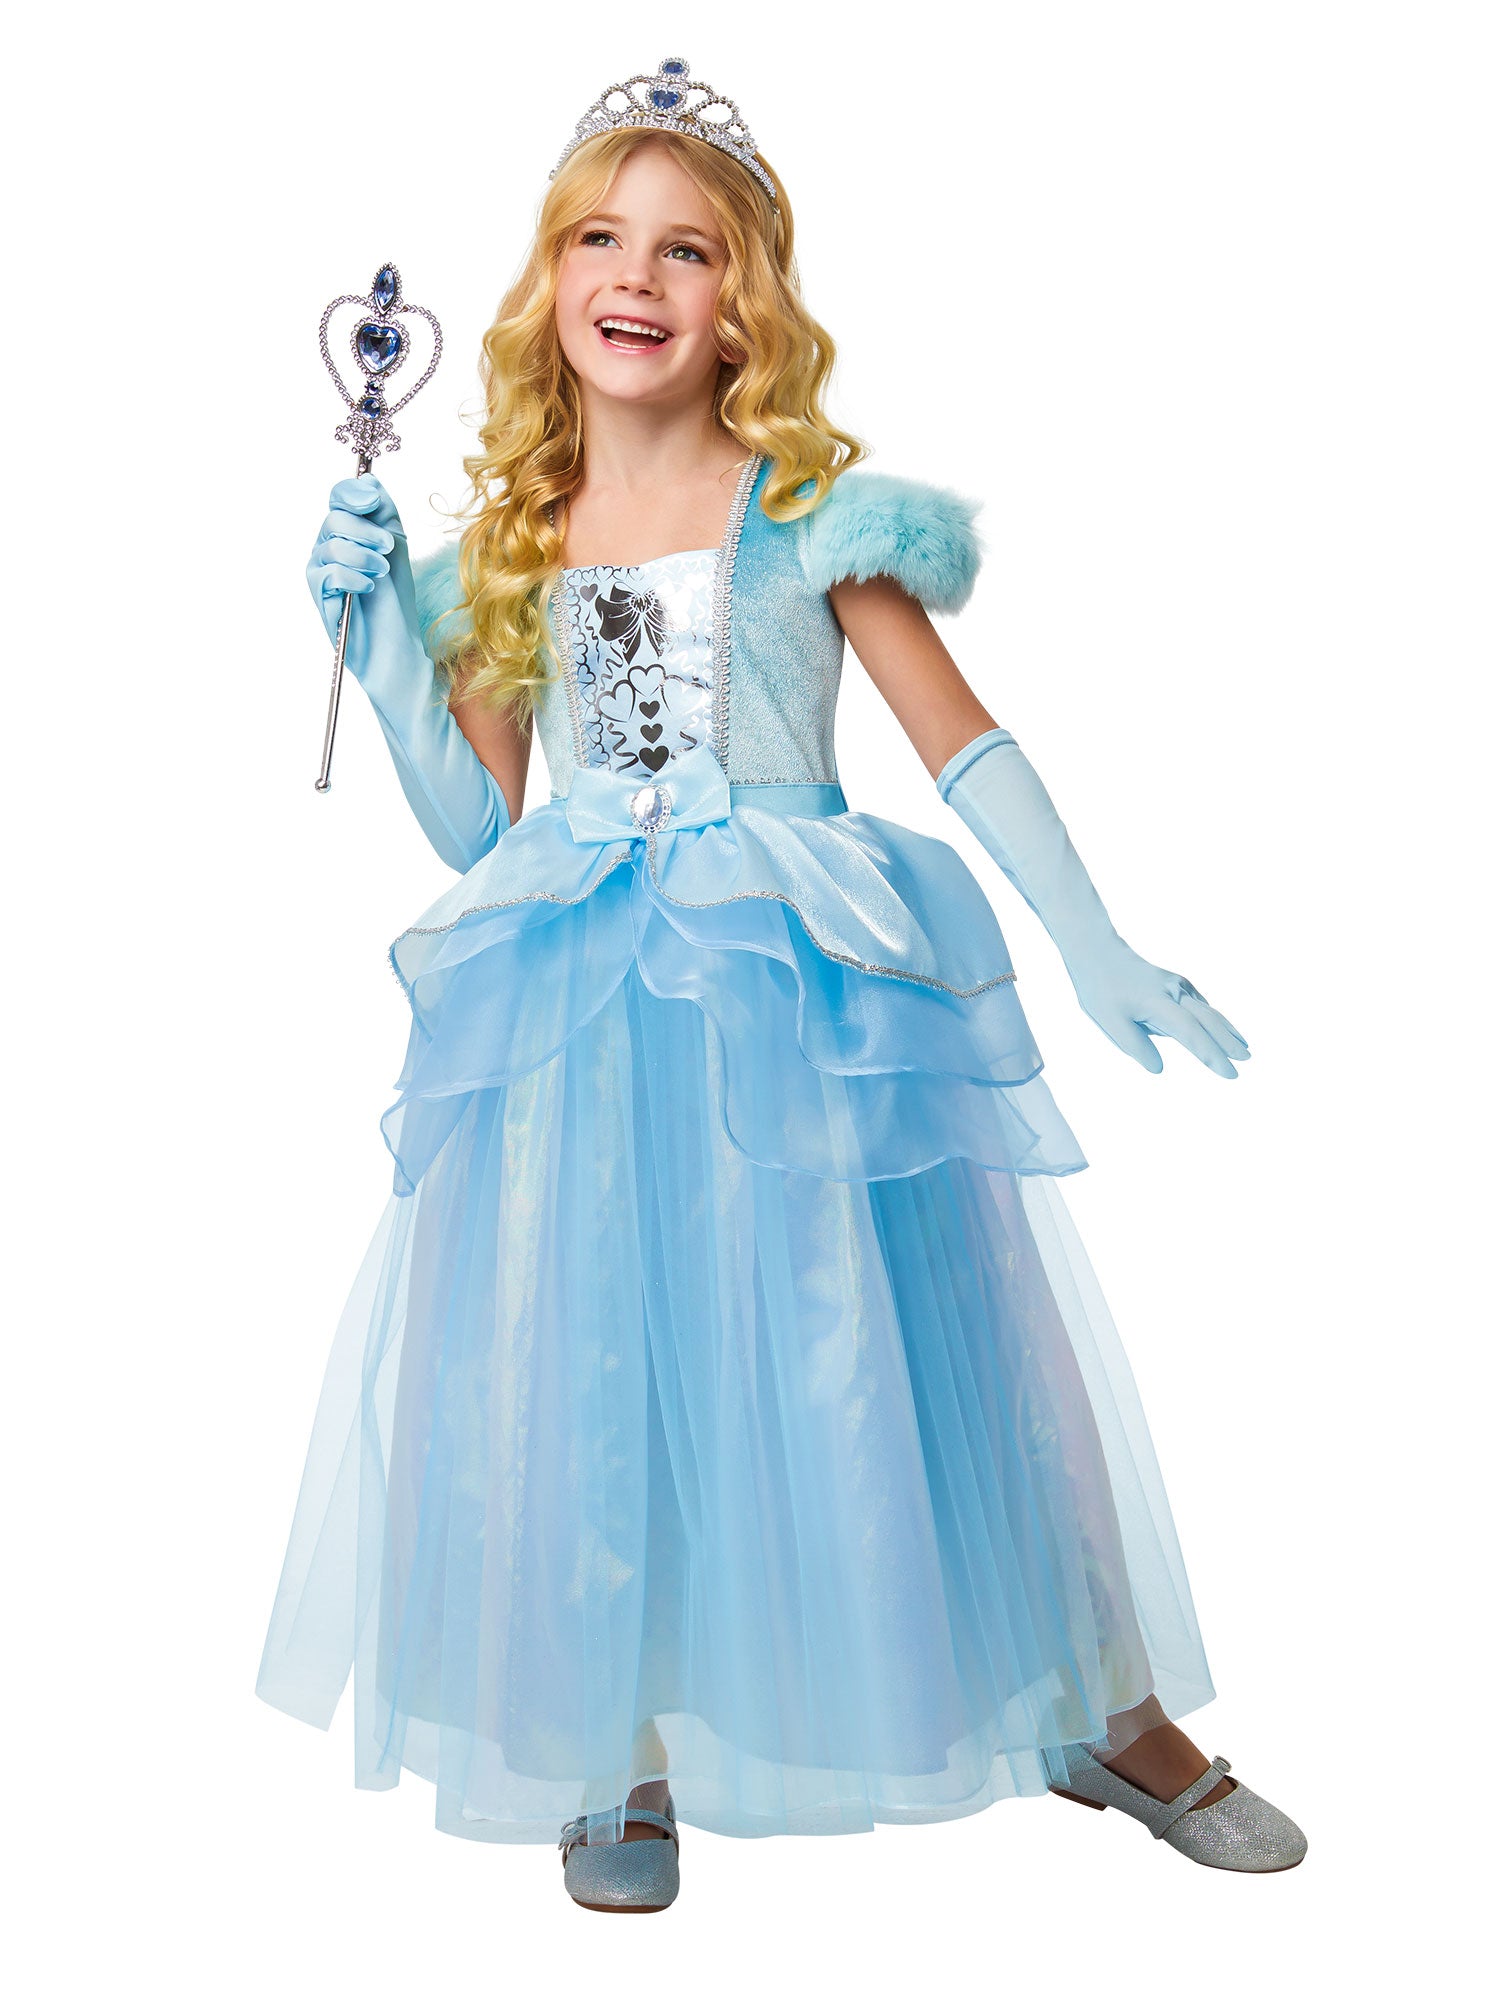 Blue Princess Costume Girl